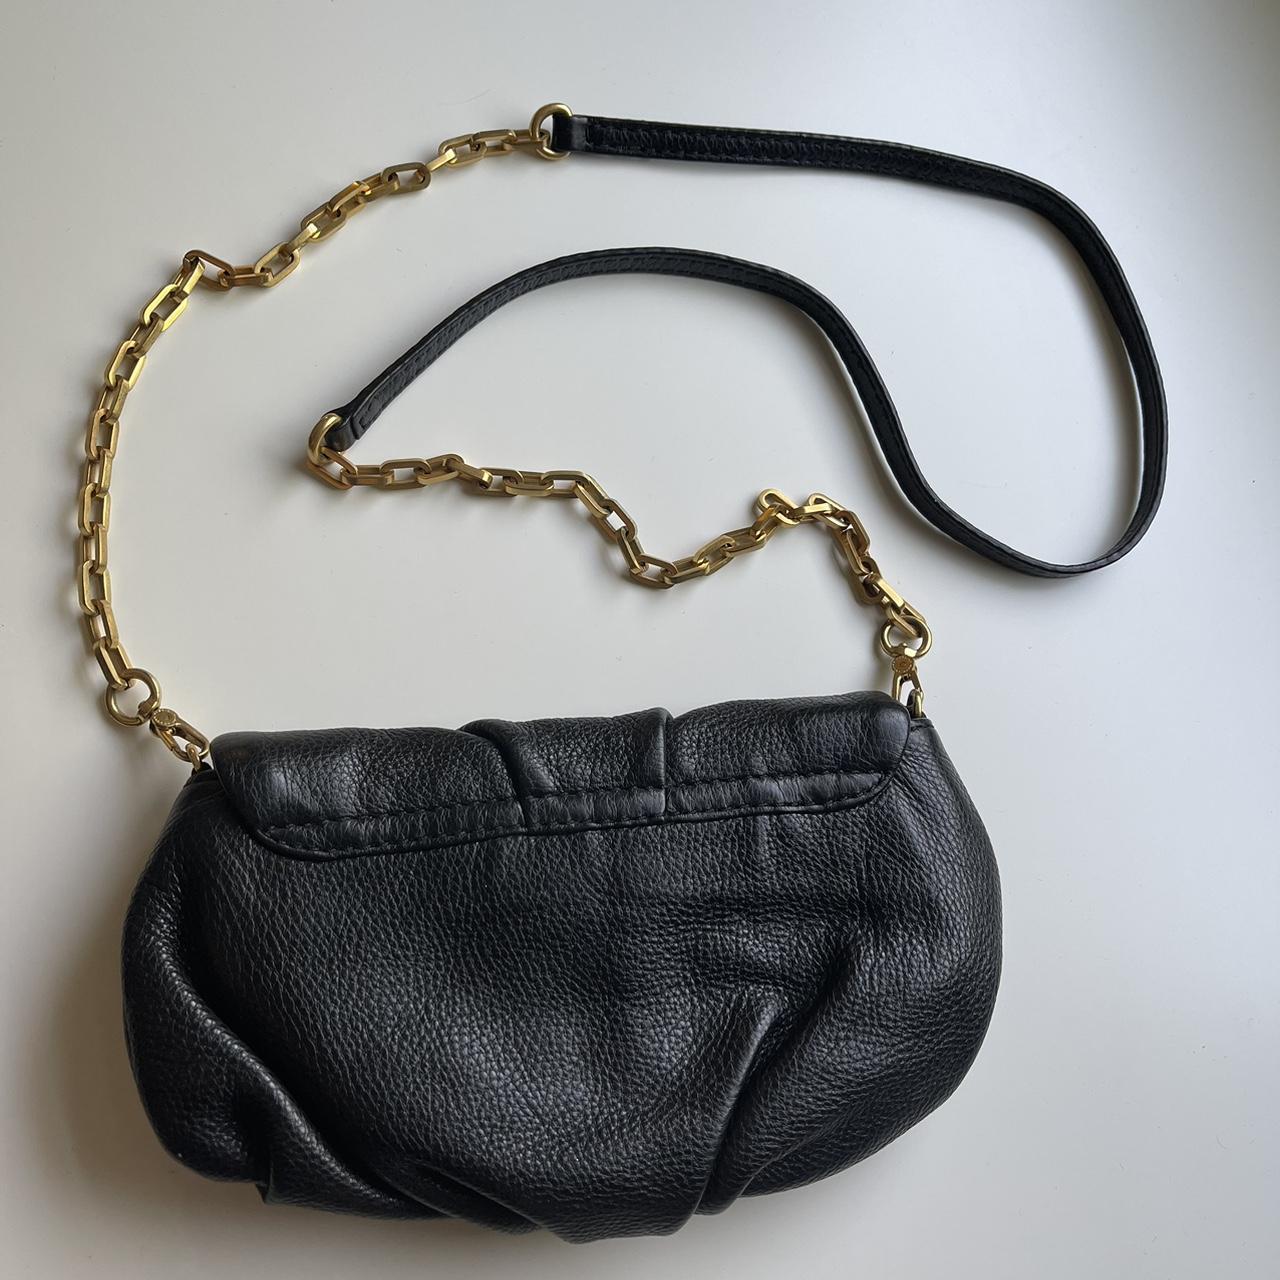 Marc Jacobs Zoom crossbody bag. Color: black / - Depop